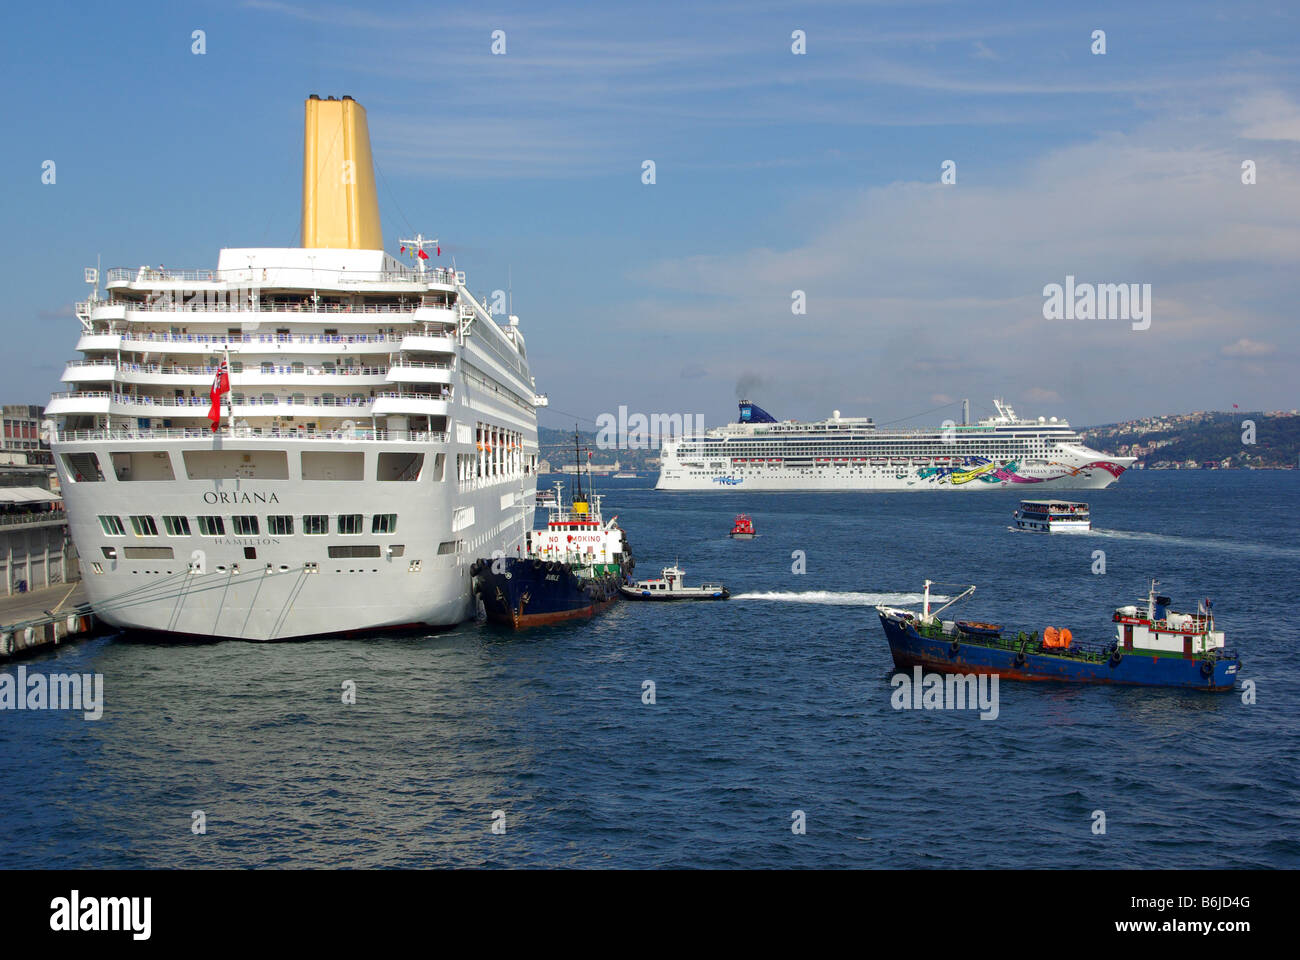 Istanbul Port on Bosporus waterway cruise ship P&O Oriana with bunkering ships attending & Norwegian Jewel ocean liner departs Turkey Europe Stock Photo